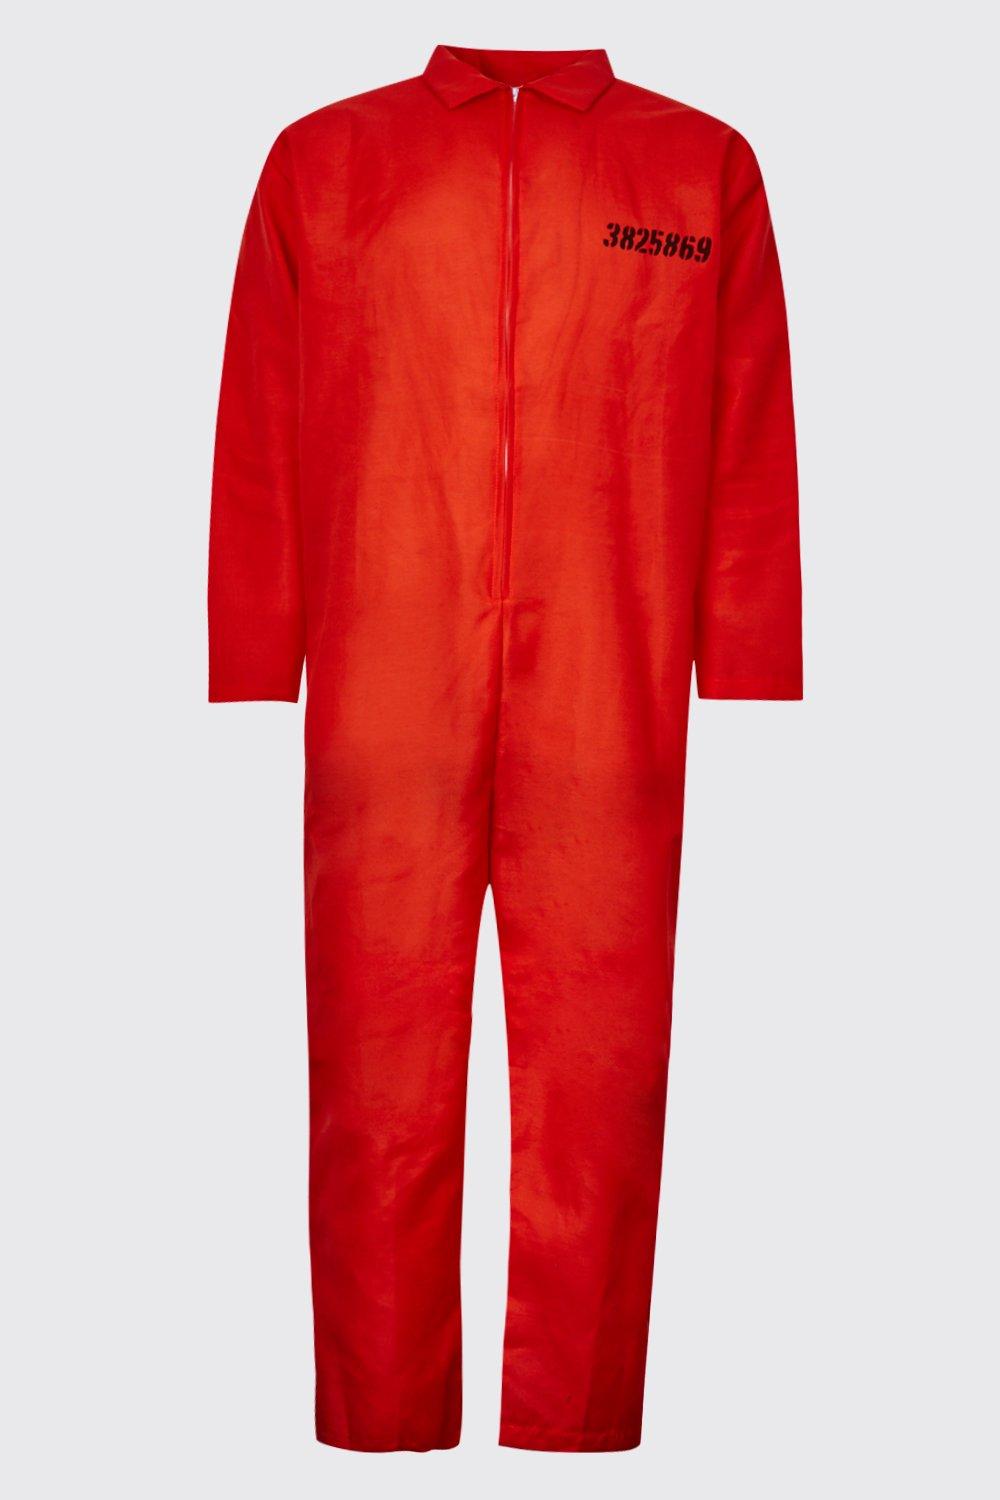 Men's Halloween Prisoner Orange Overall Costume